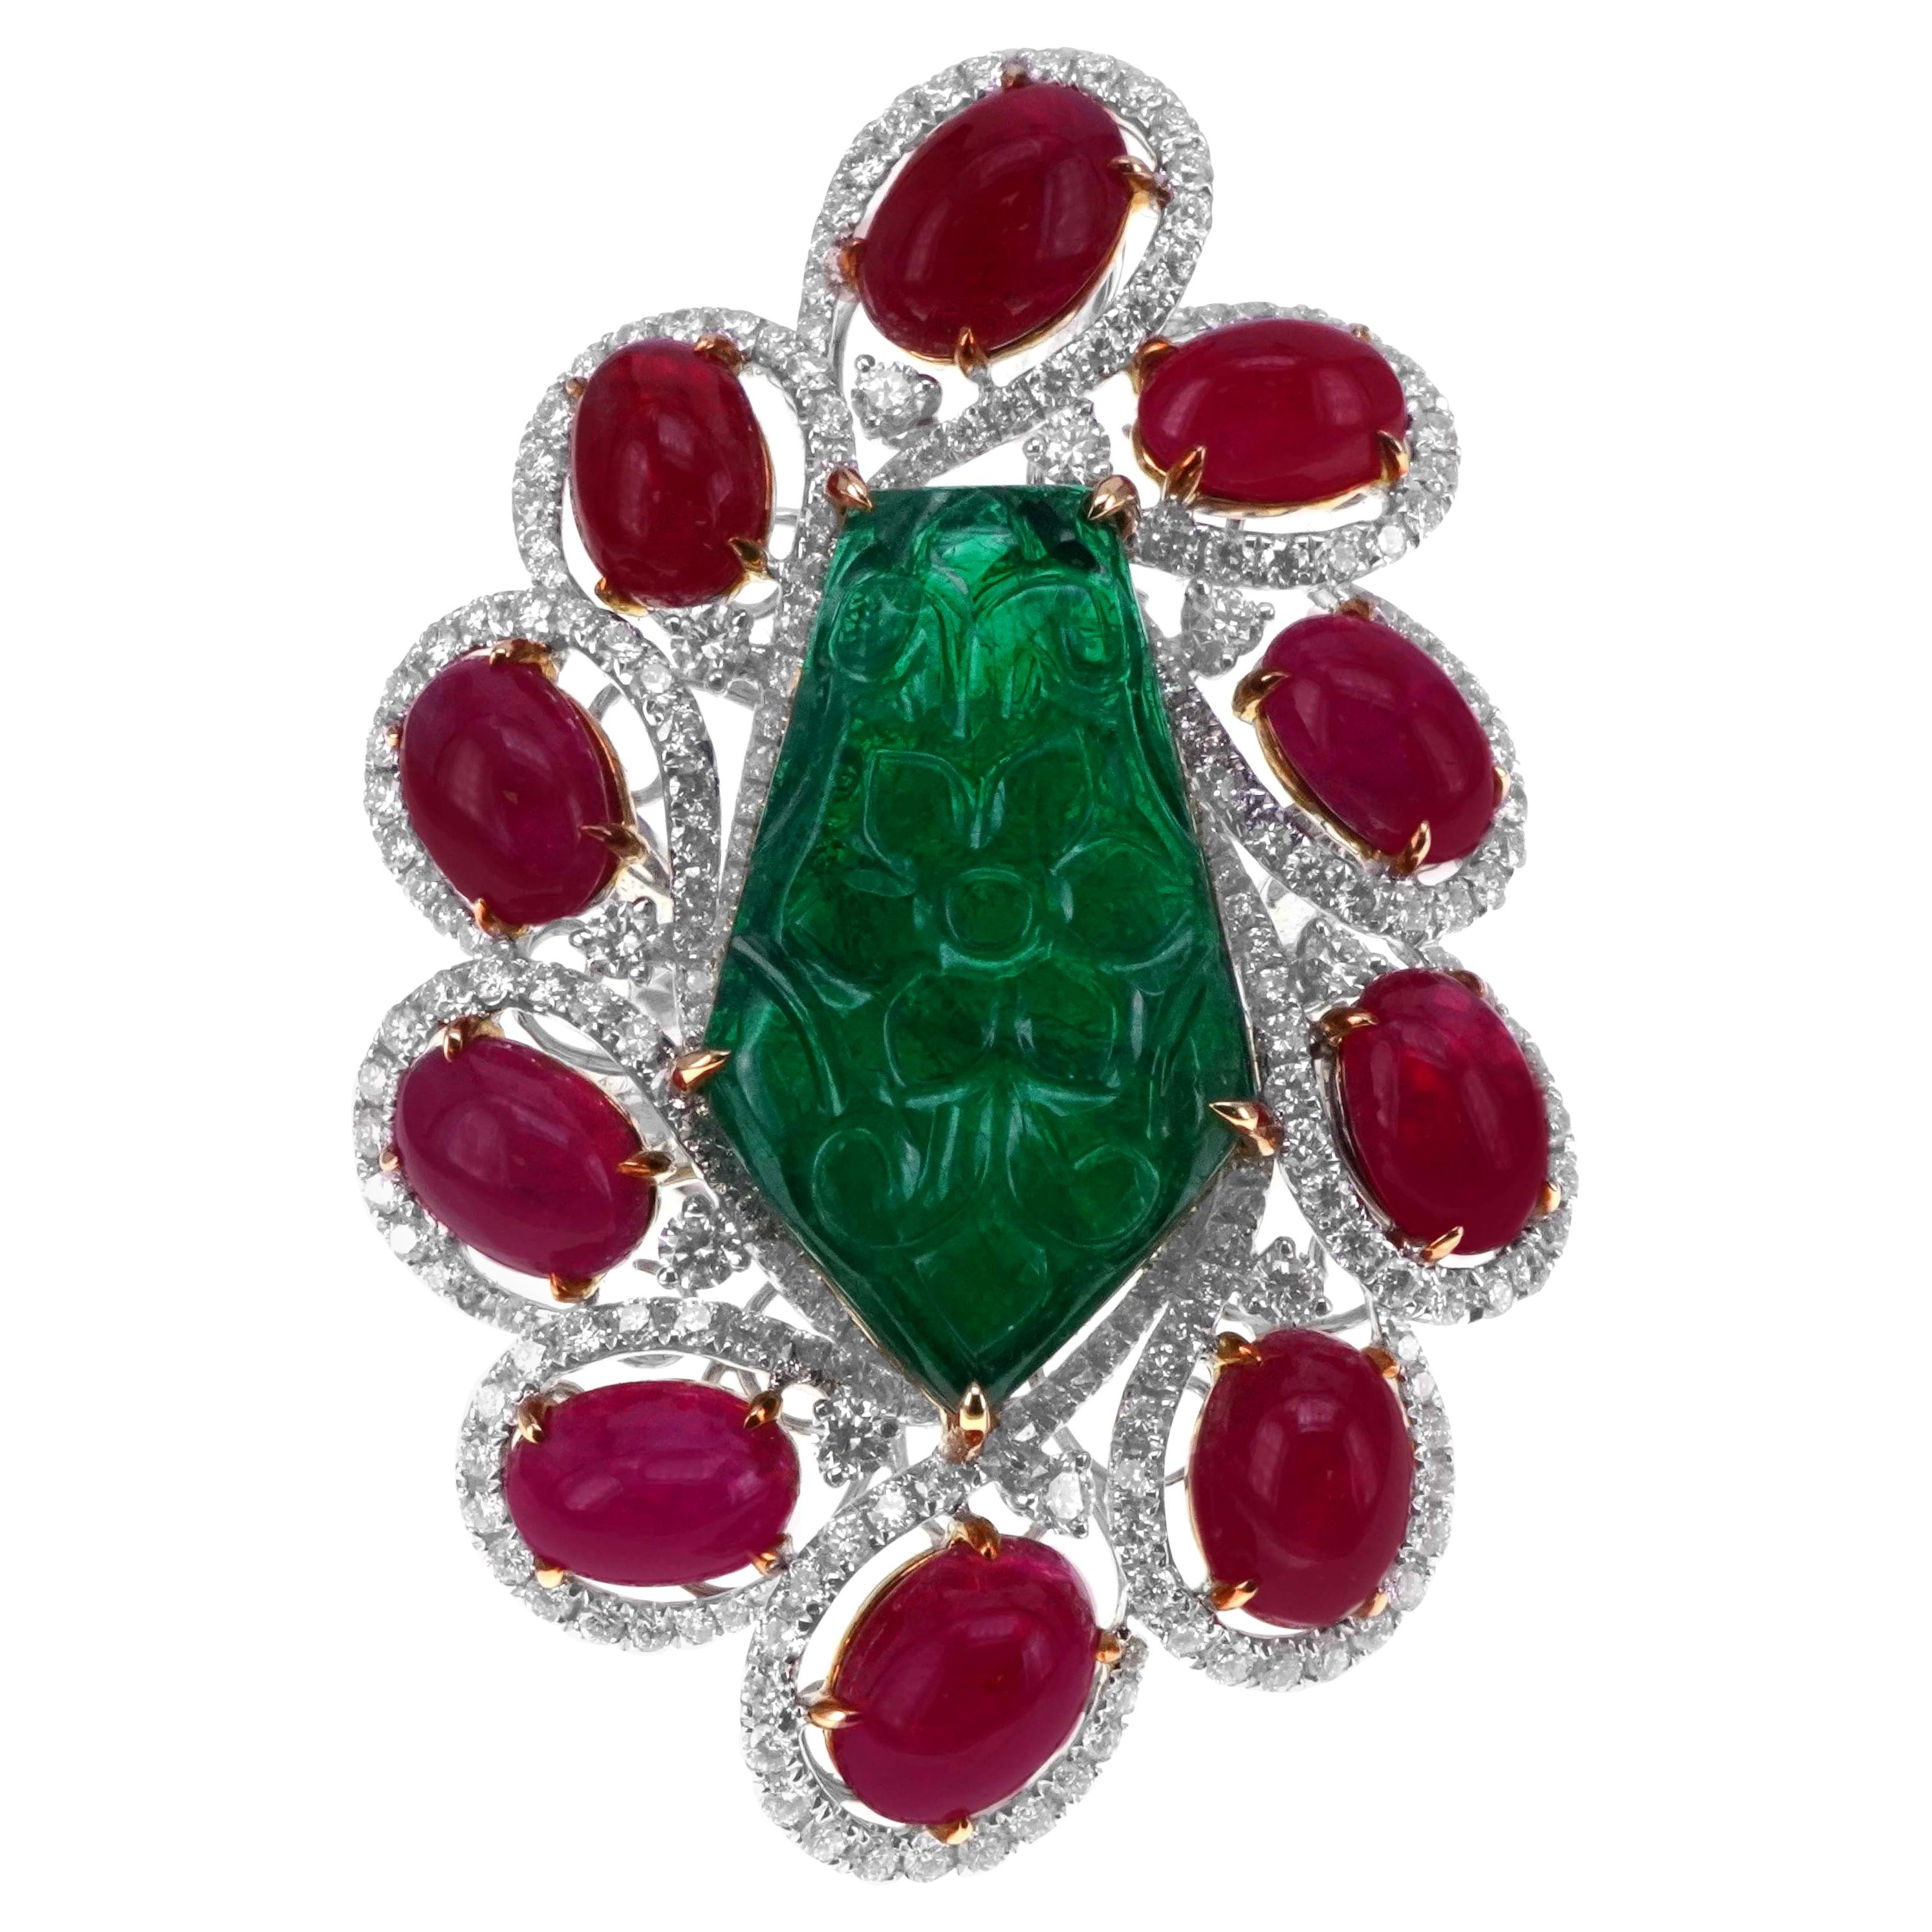 11 Karat lebhaft grüner Smaragd im Mughal-Schliff & 16 Karat lebhaft roter Rubin 18 Karat alter Ring